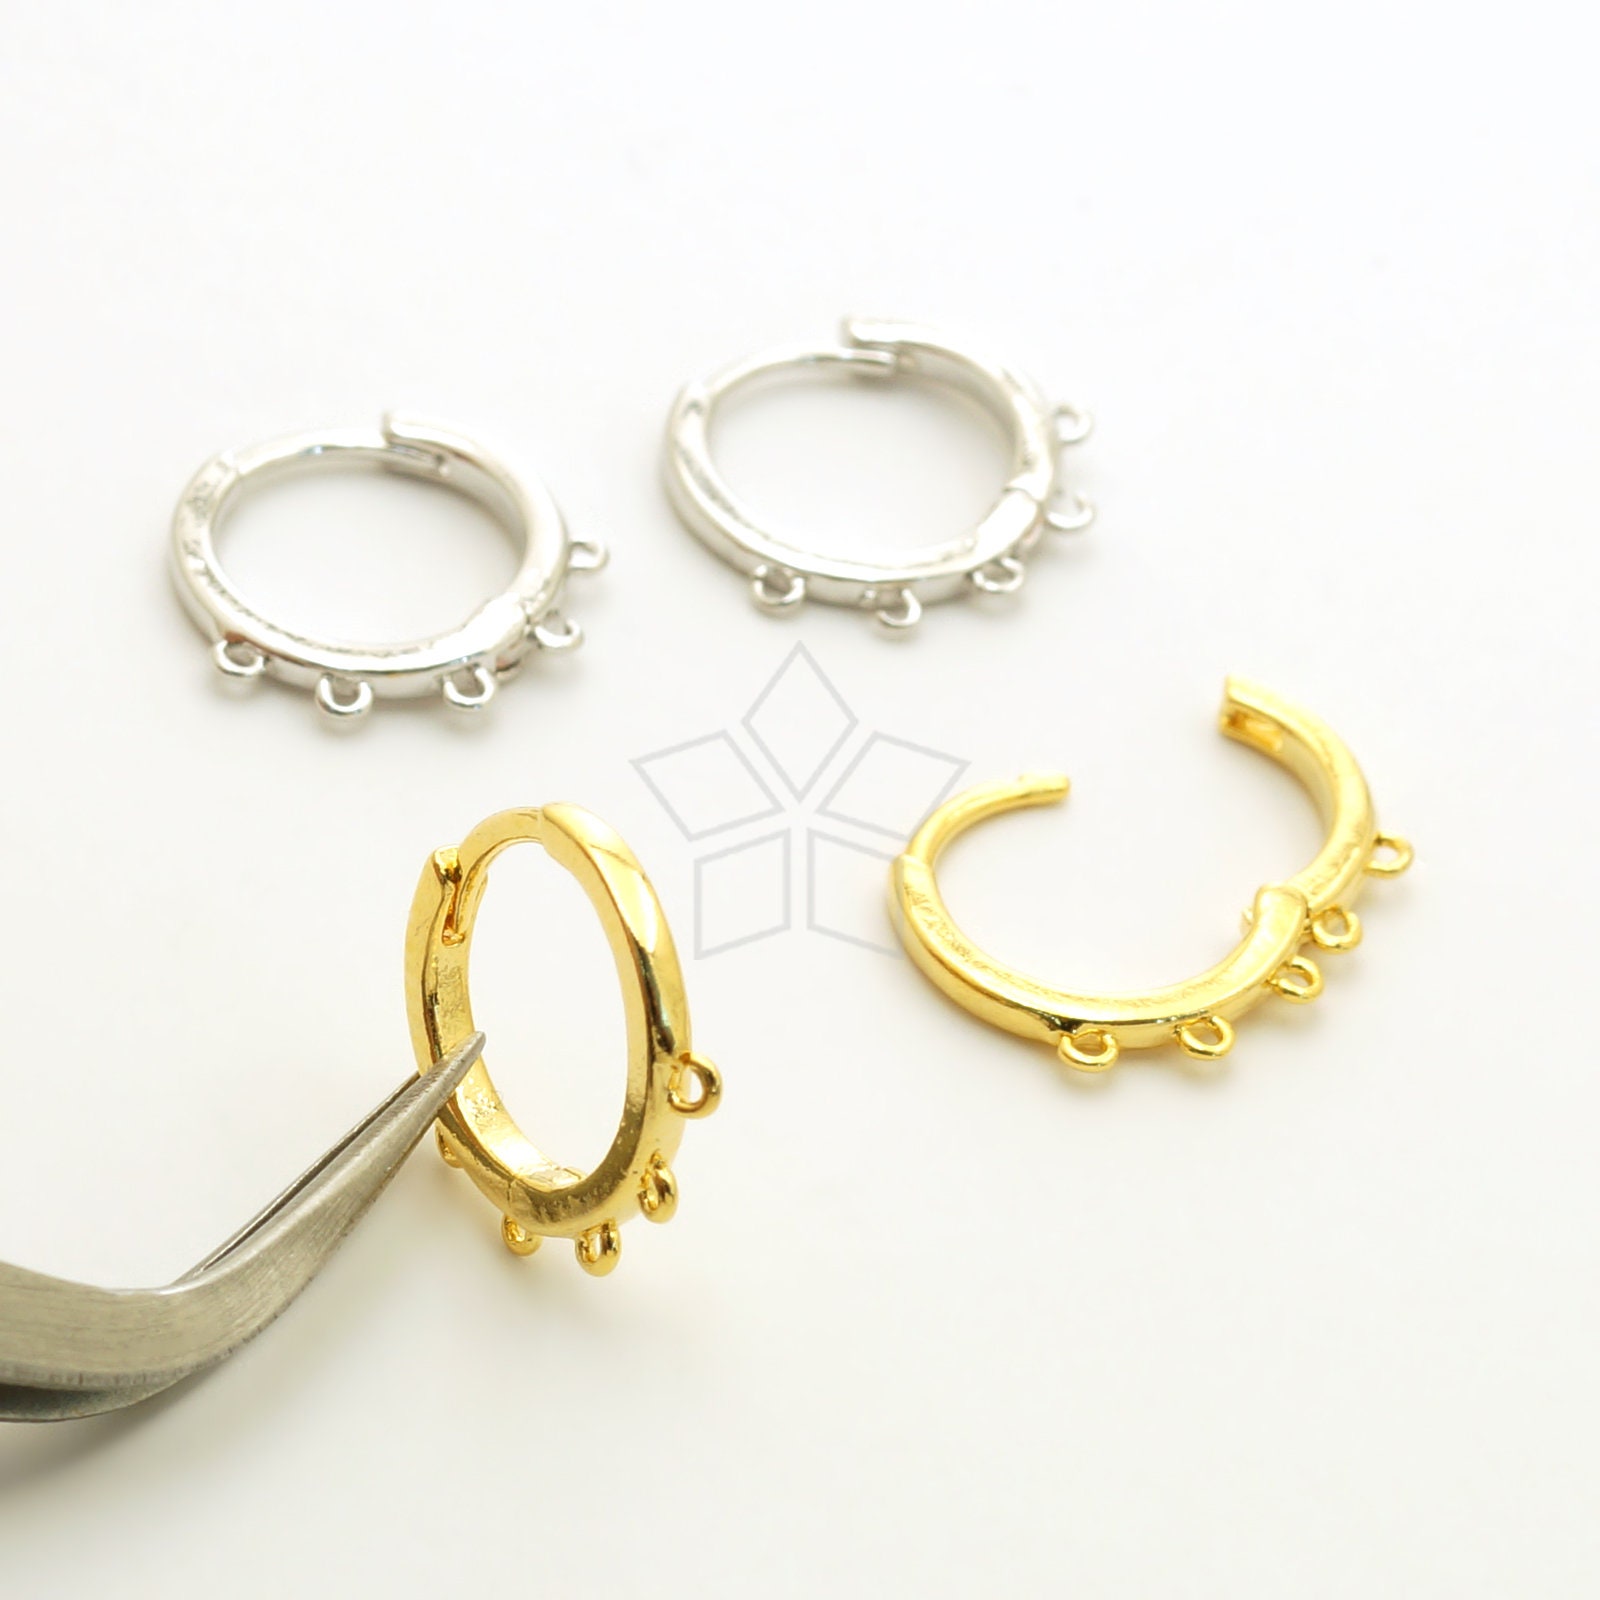 (39172)6PCS 14MM 24K Gold Color Brass Hexagon Loop Earrings Hoops Jewelry  Making Supplies Diy Findings Accessories